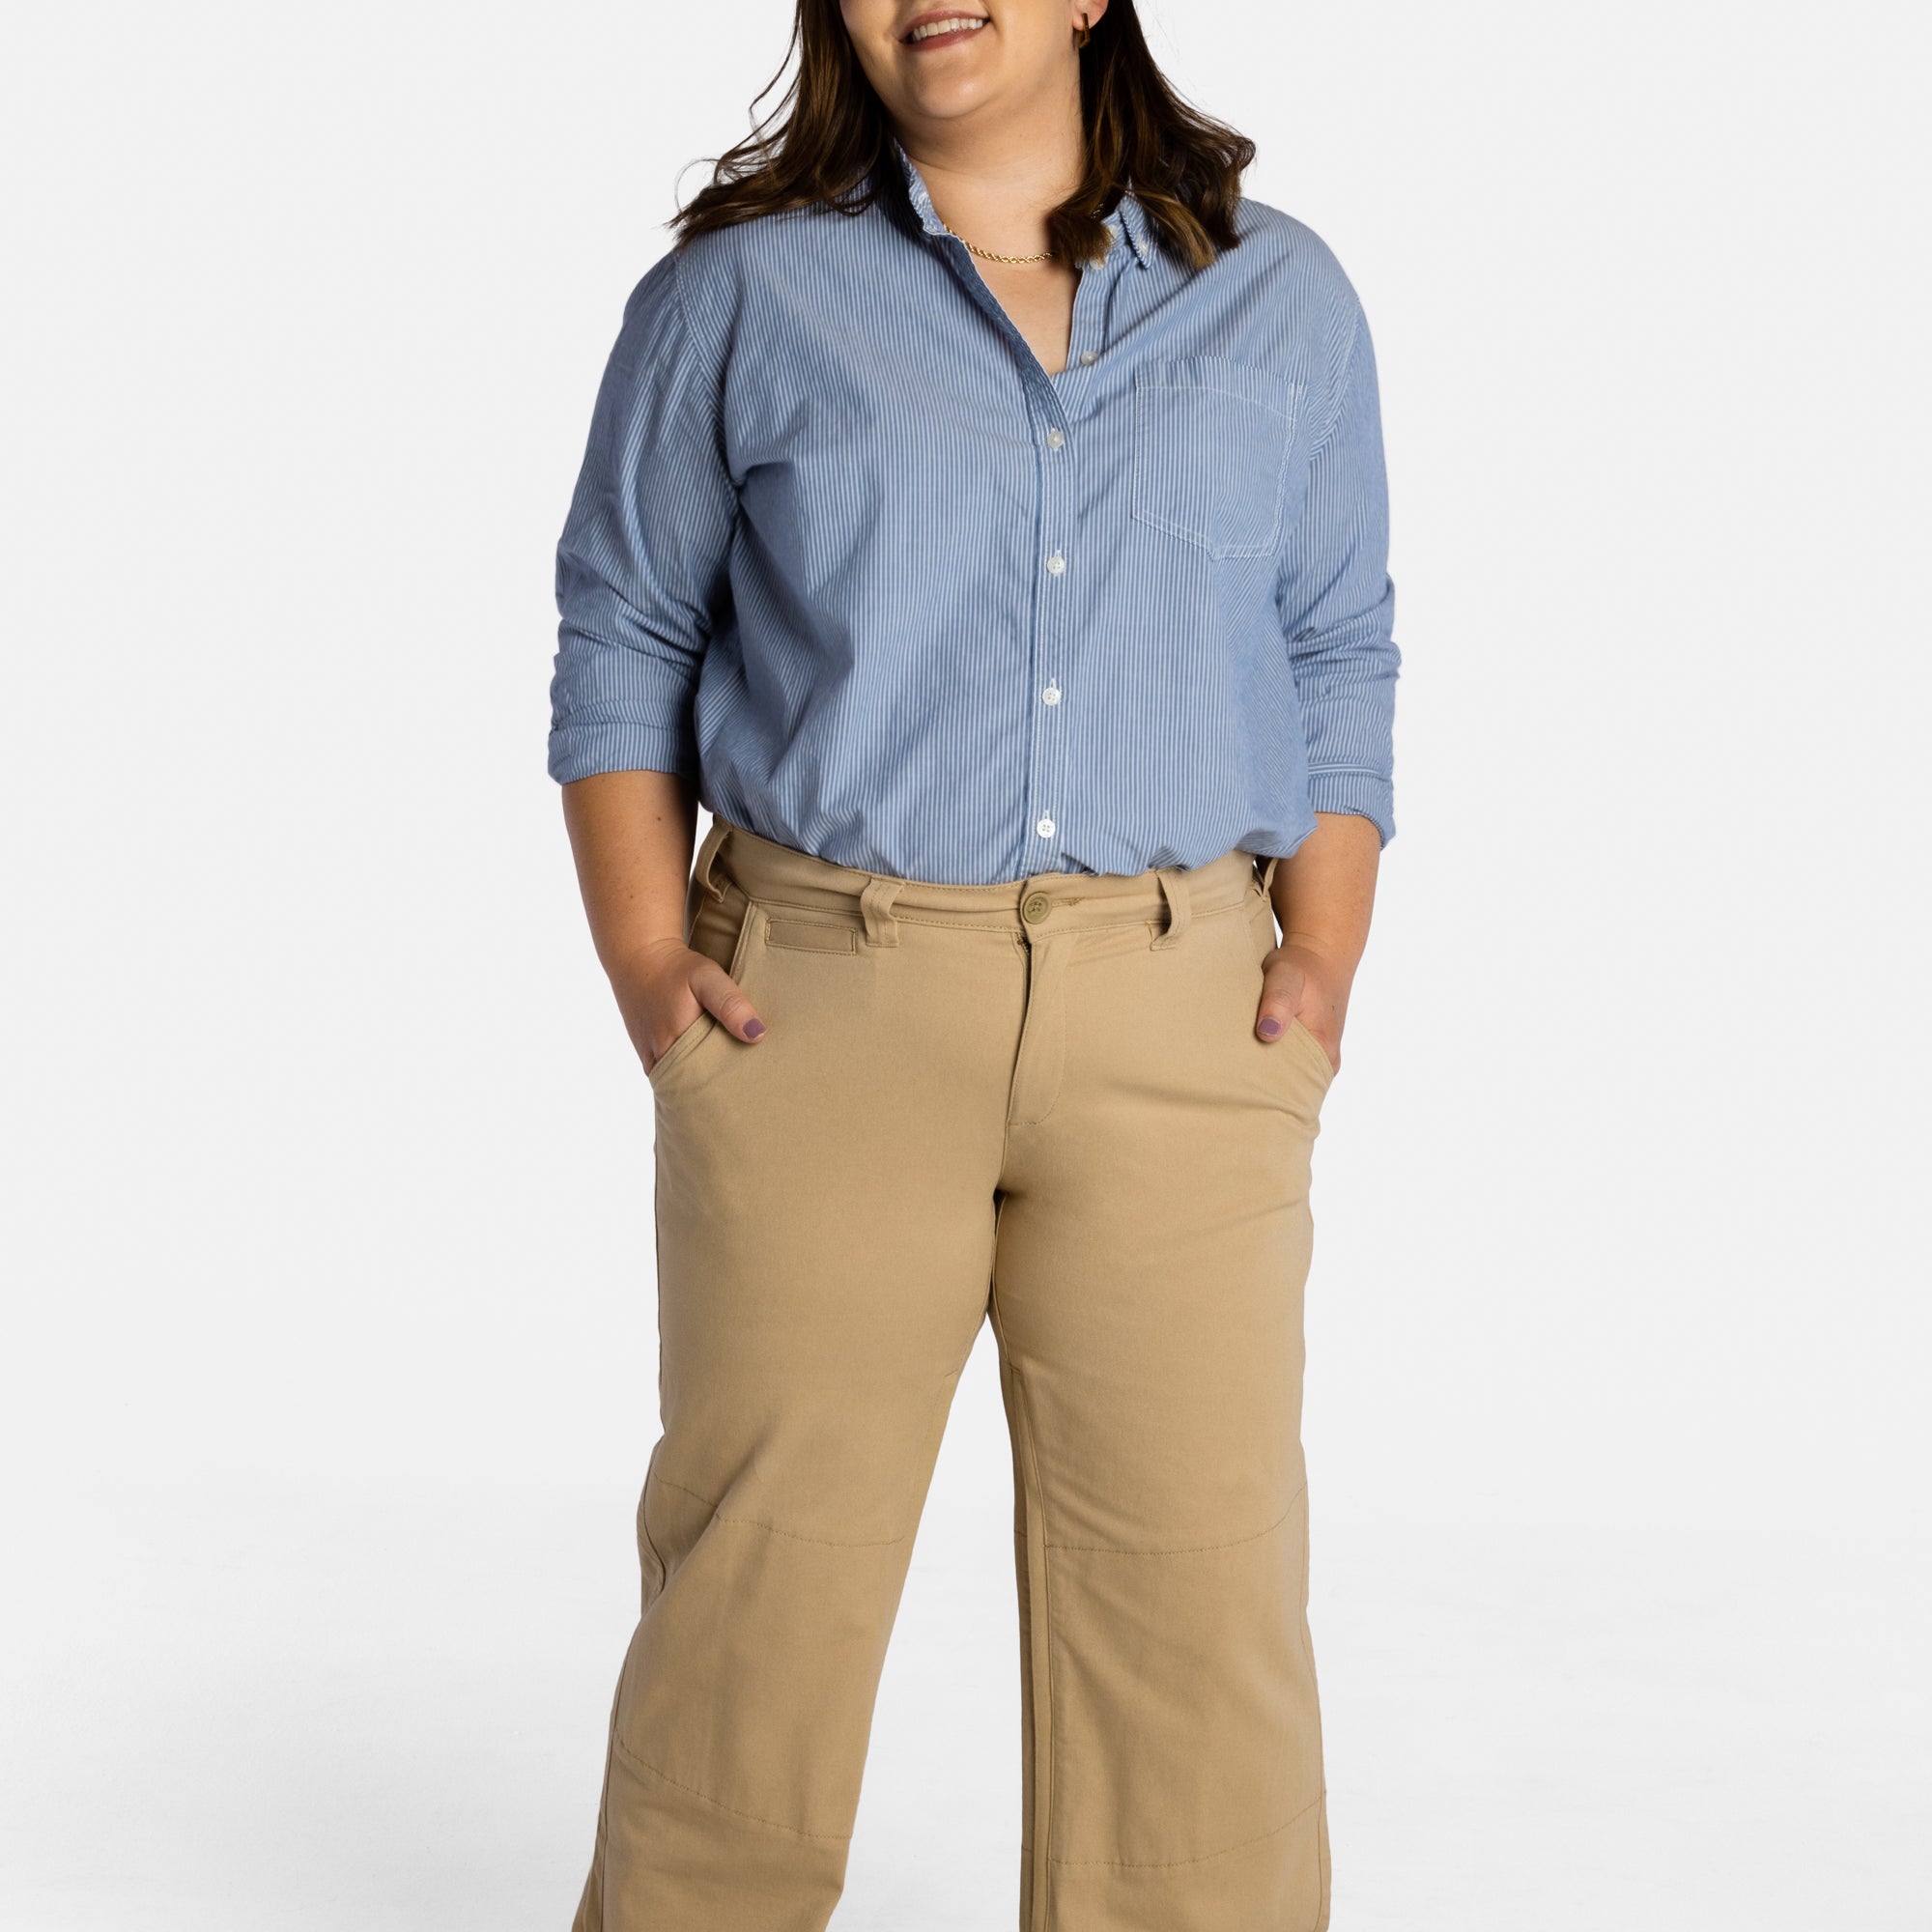 Erica Cole, the founder of No Limbits, wears the No Limbits Adaptive Women's Khaki Unlimbited Pants.